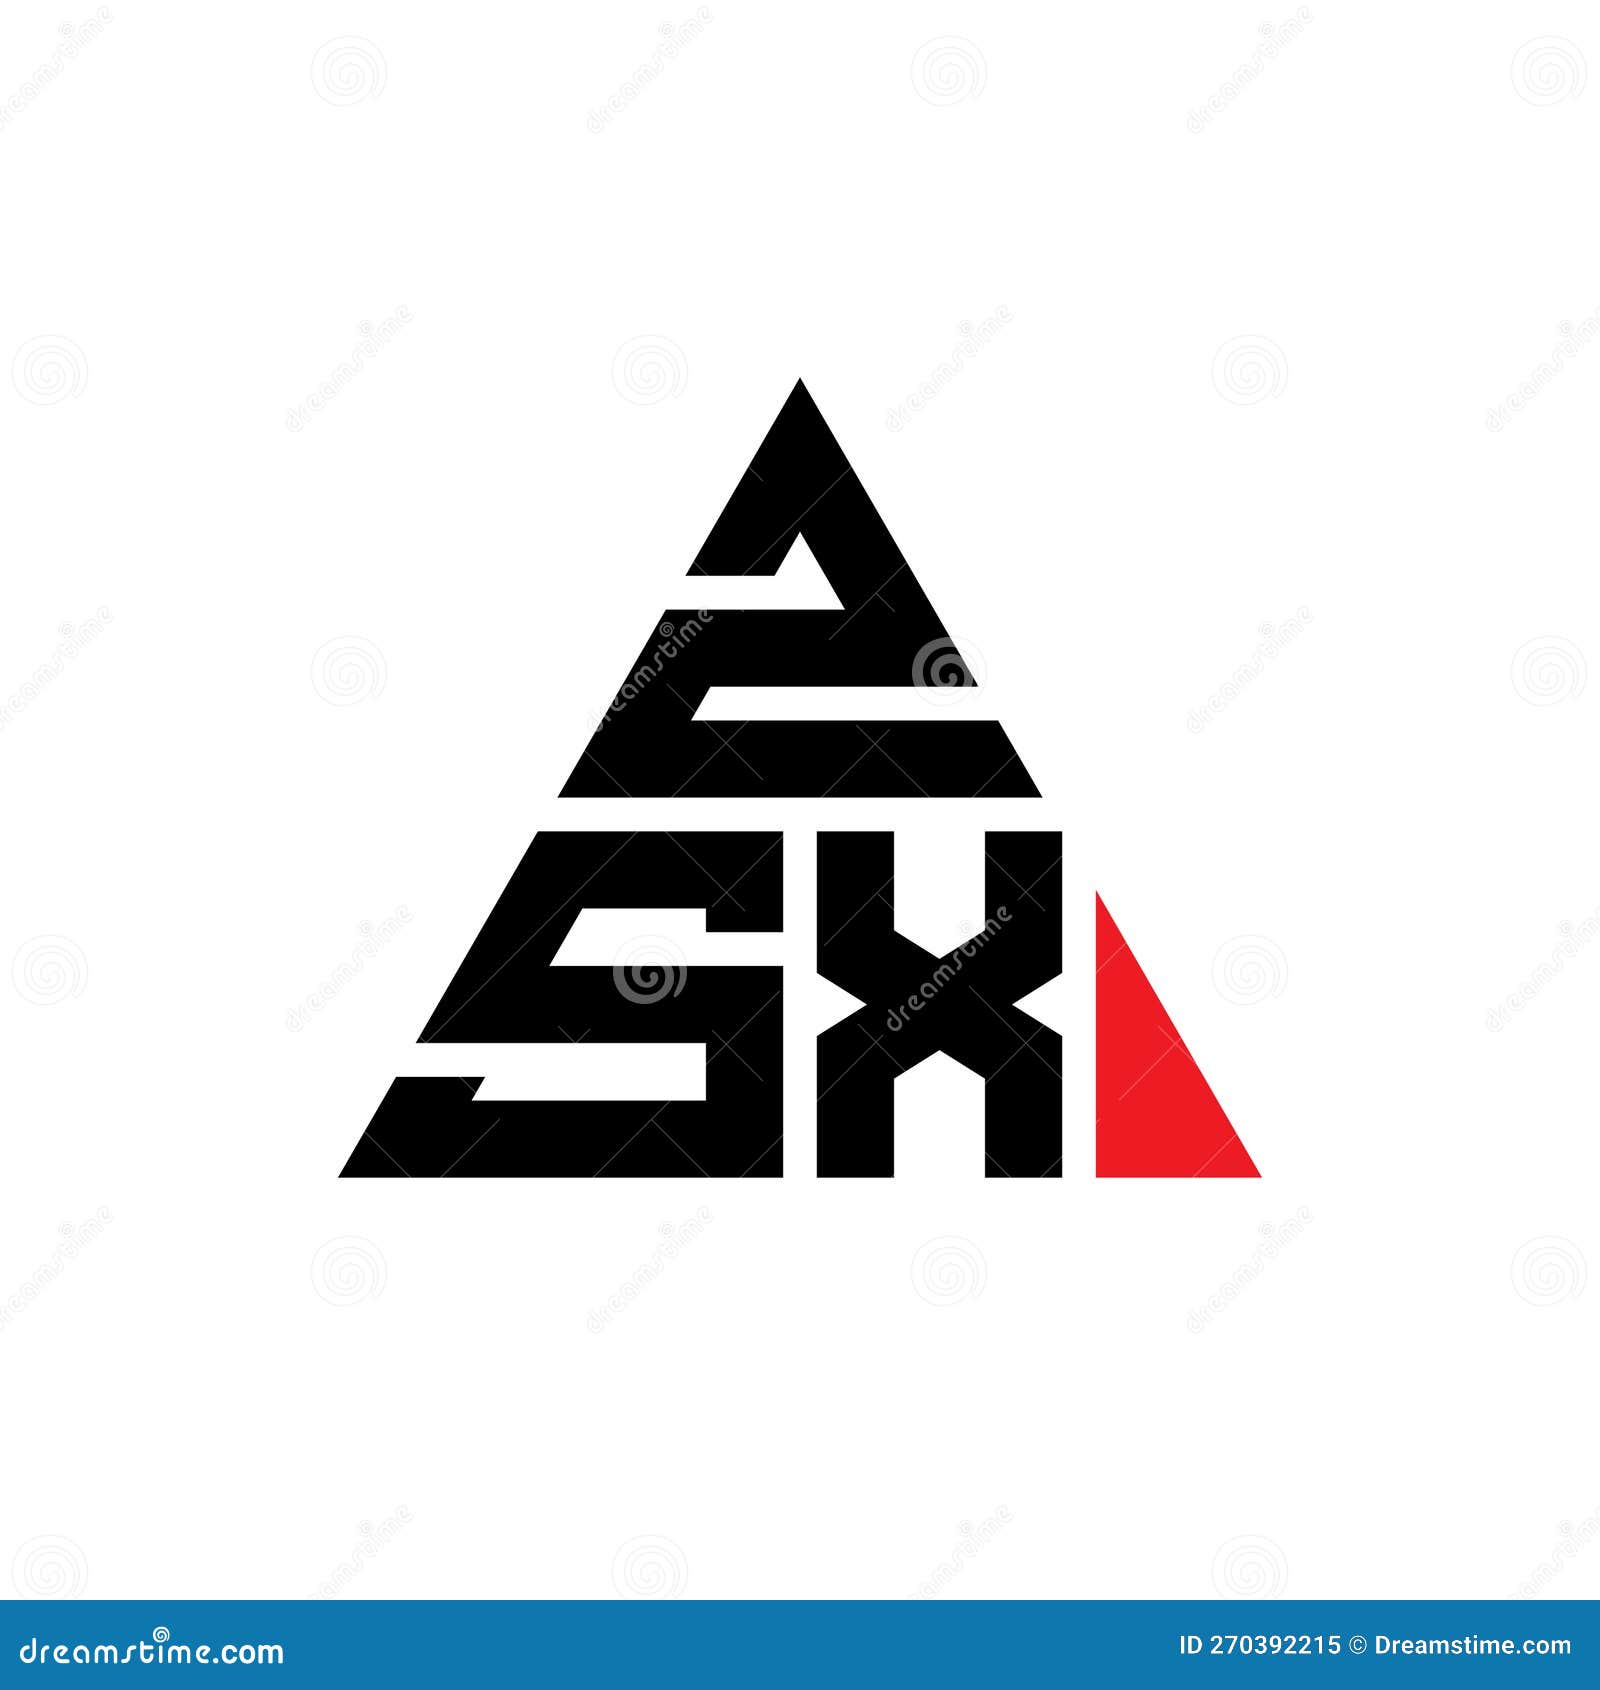 ZSX Triangle Letter Logo Design with Triangle Shape. ZSX Triangle Logo ...